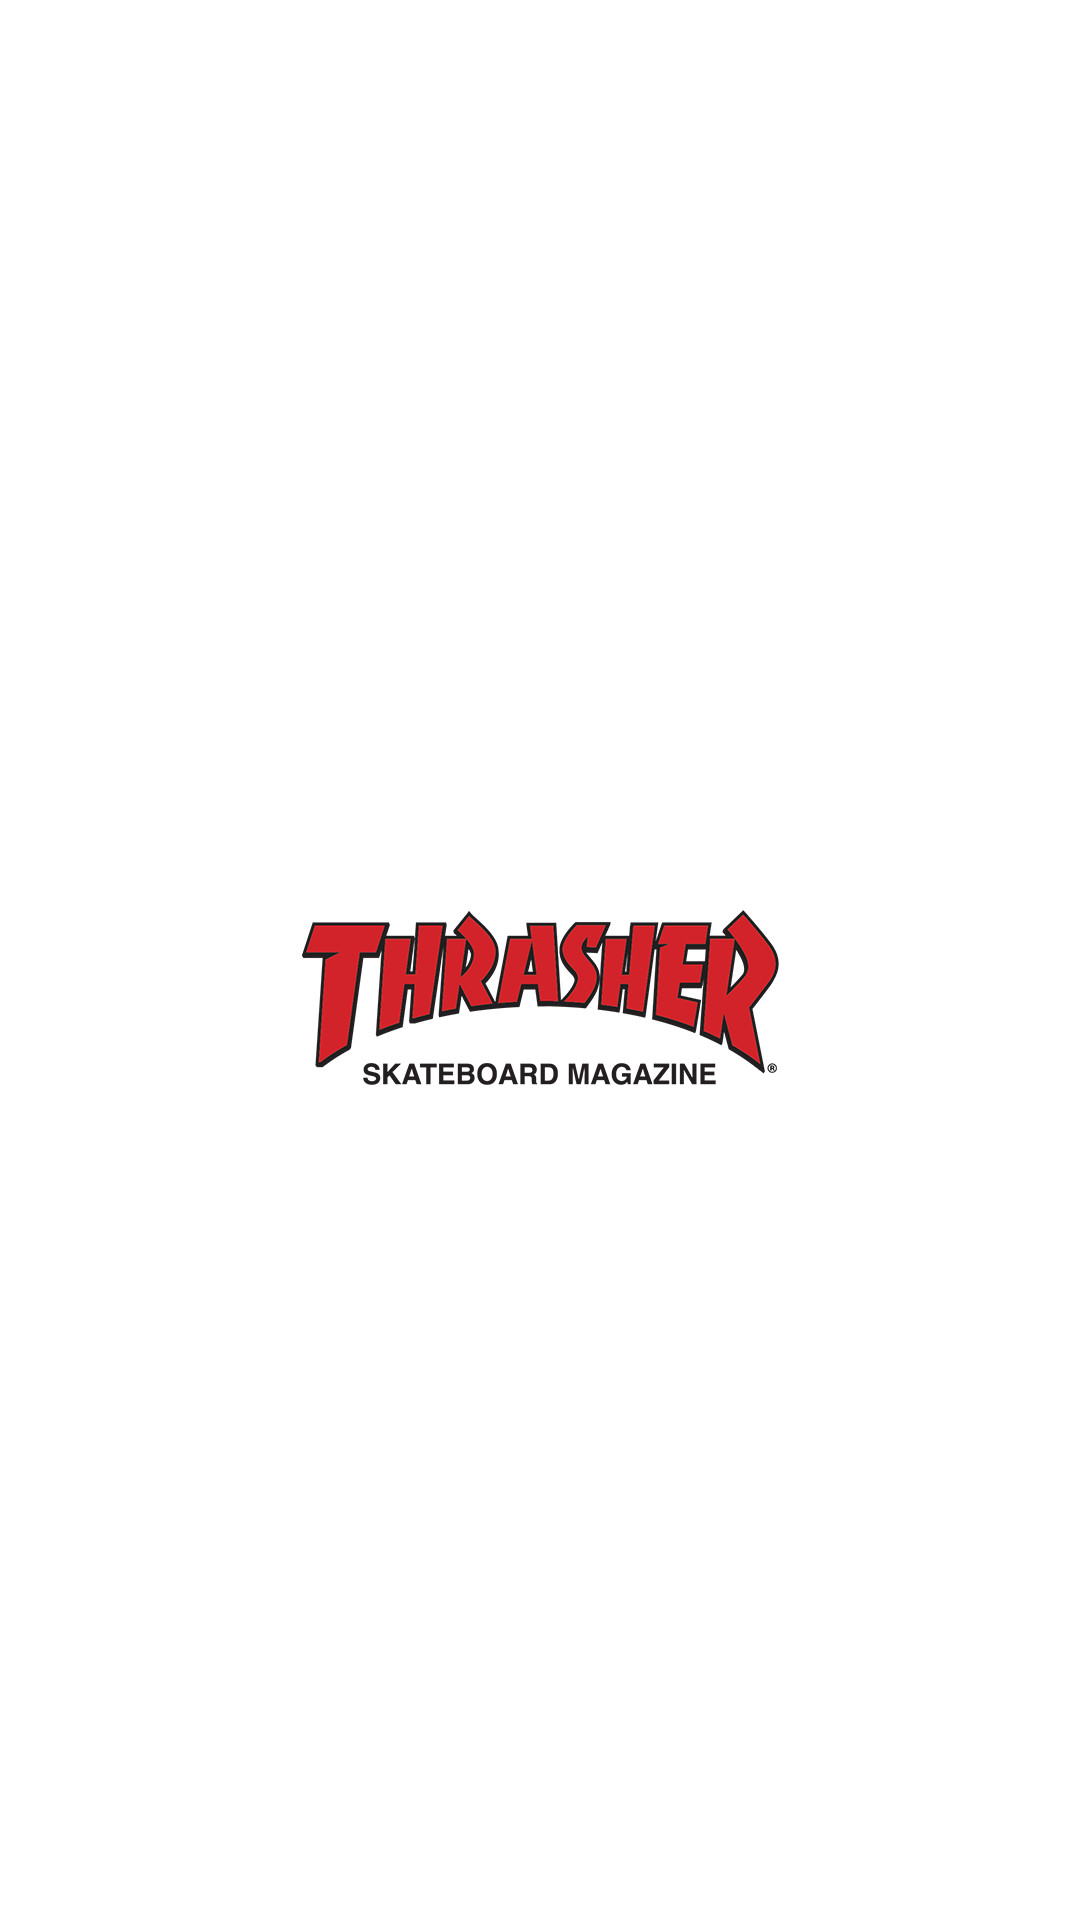 1080x1920 Thrasher Skateboard Magazine Fonte: Thrasher Watch Wallpaper, Boys Wallpaper,  Wallpaper Backgrounds, Hypebeast